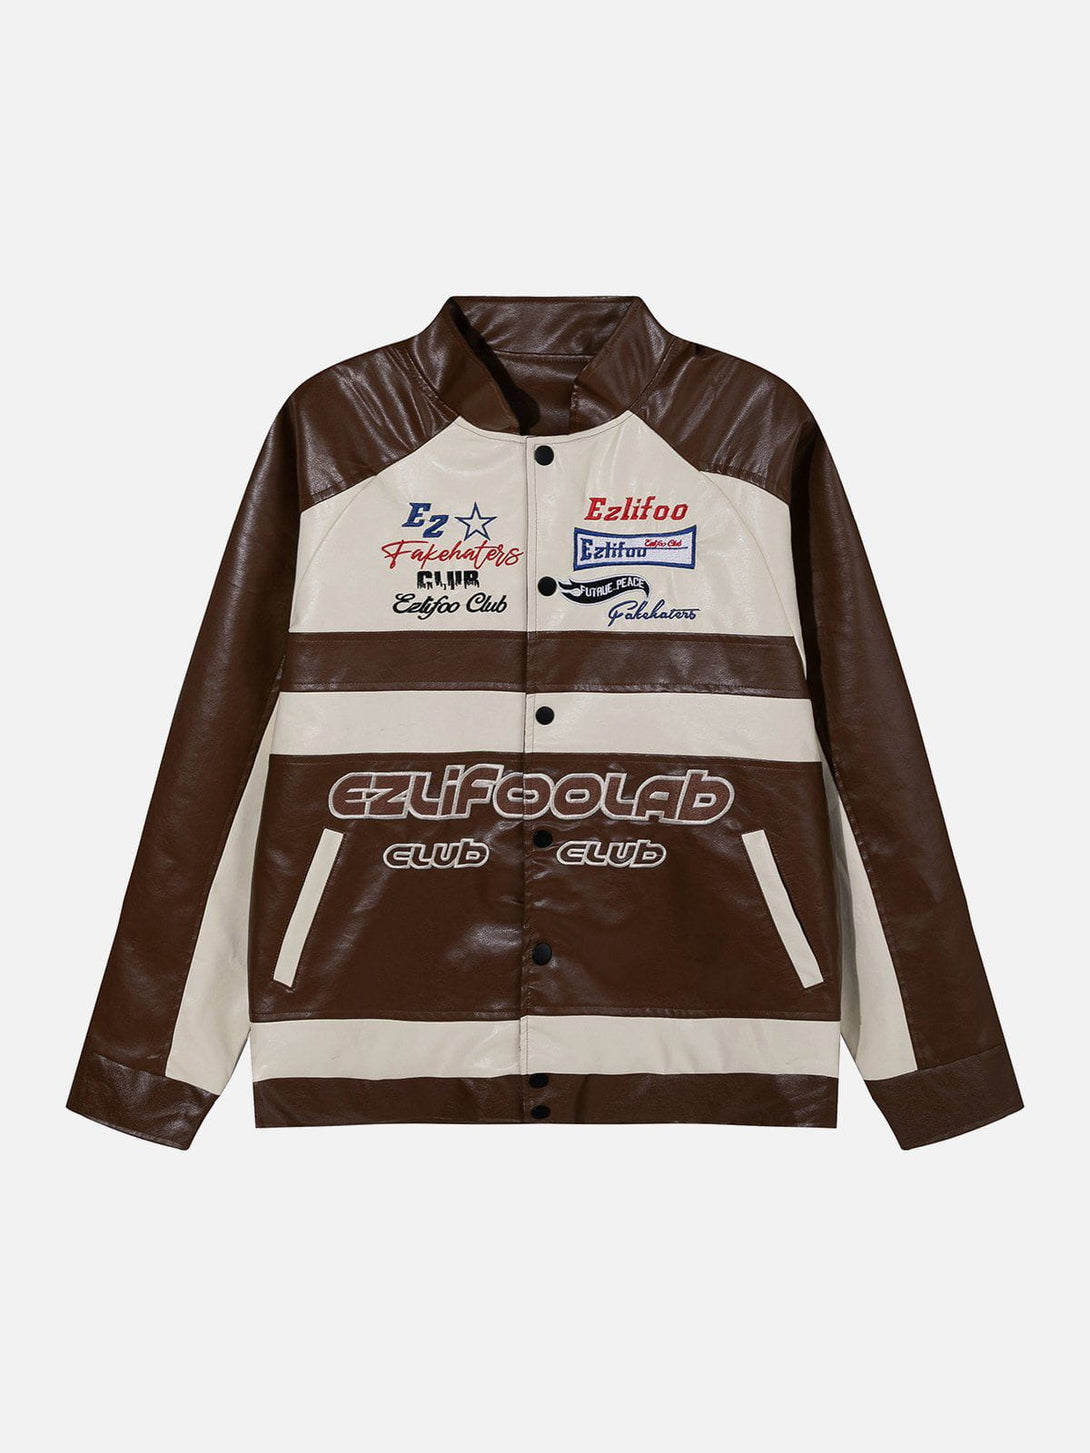 Majesda® - Embroidery Letter Racing PU Jacket outfit ideas, streetwear fashion - majesda.com